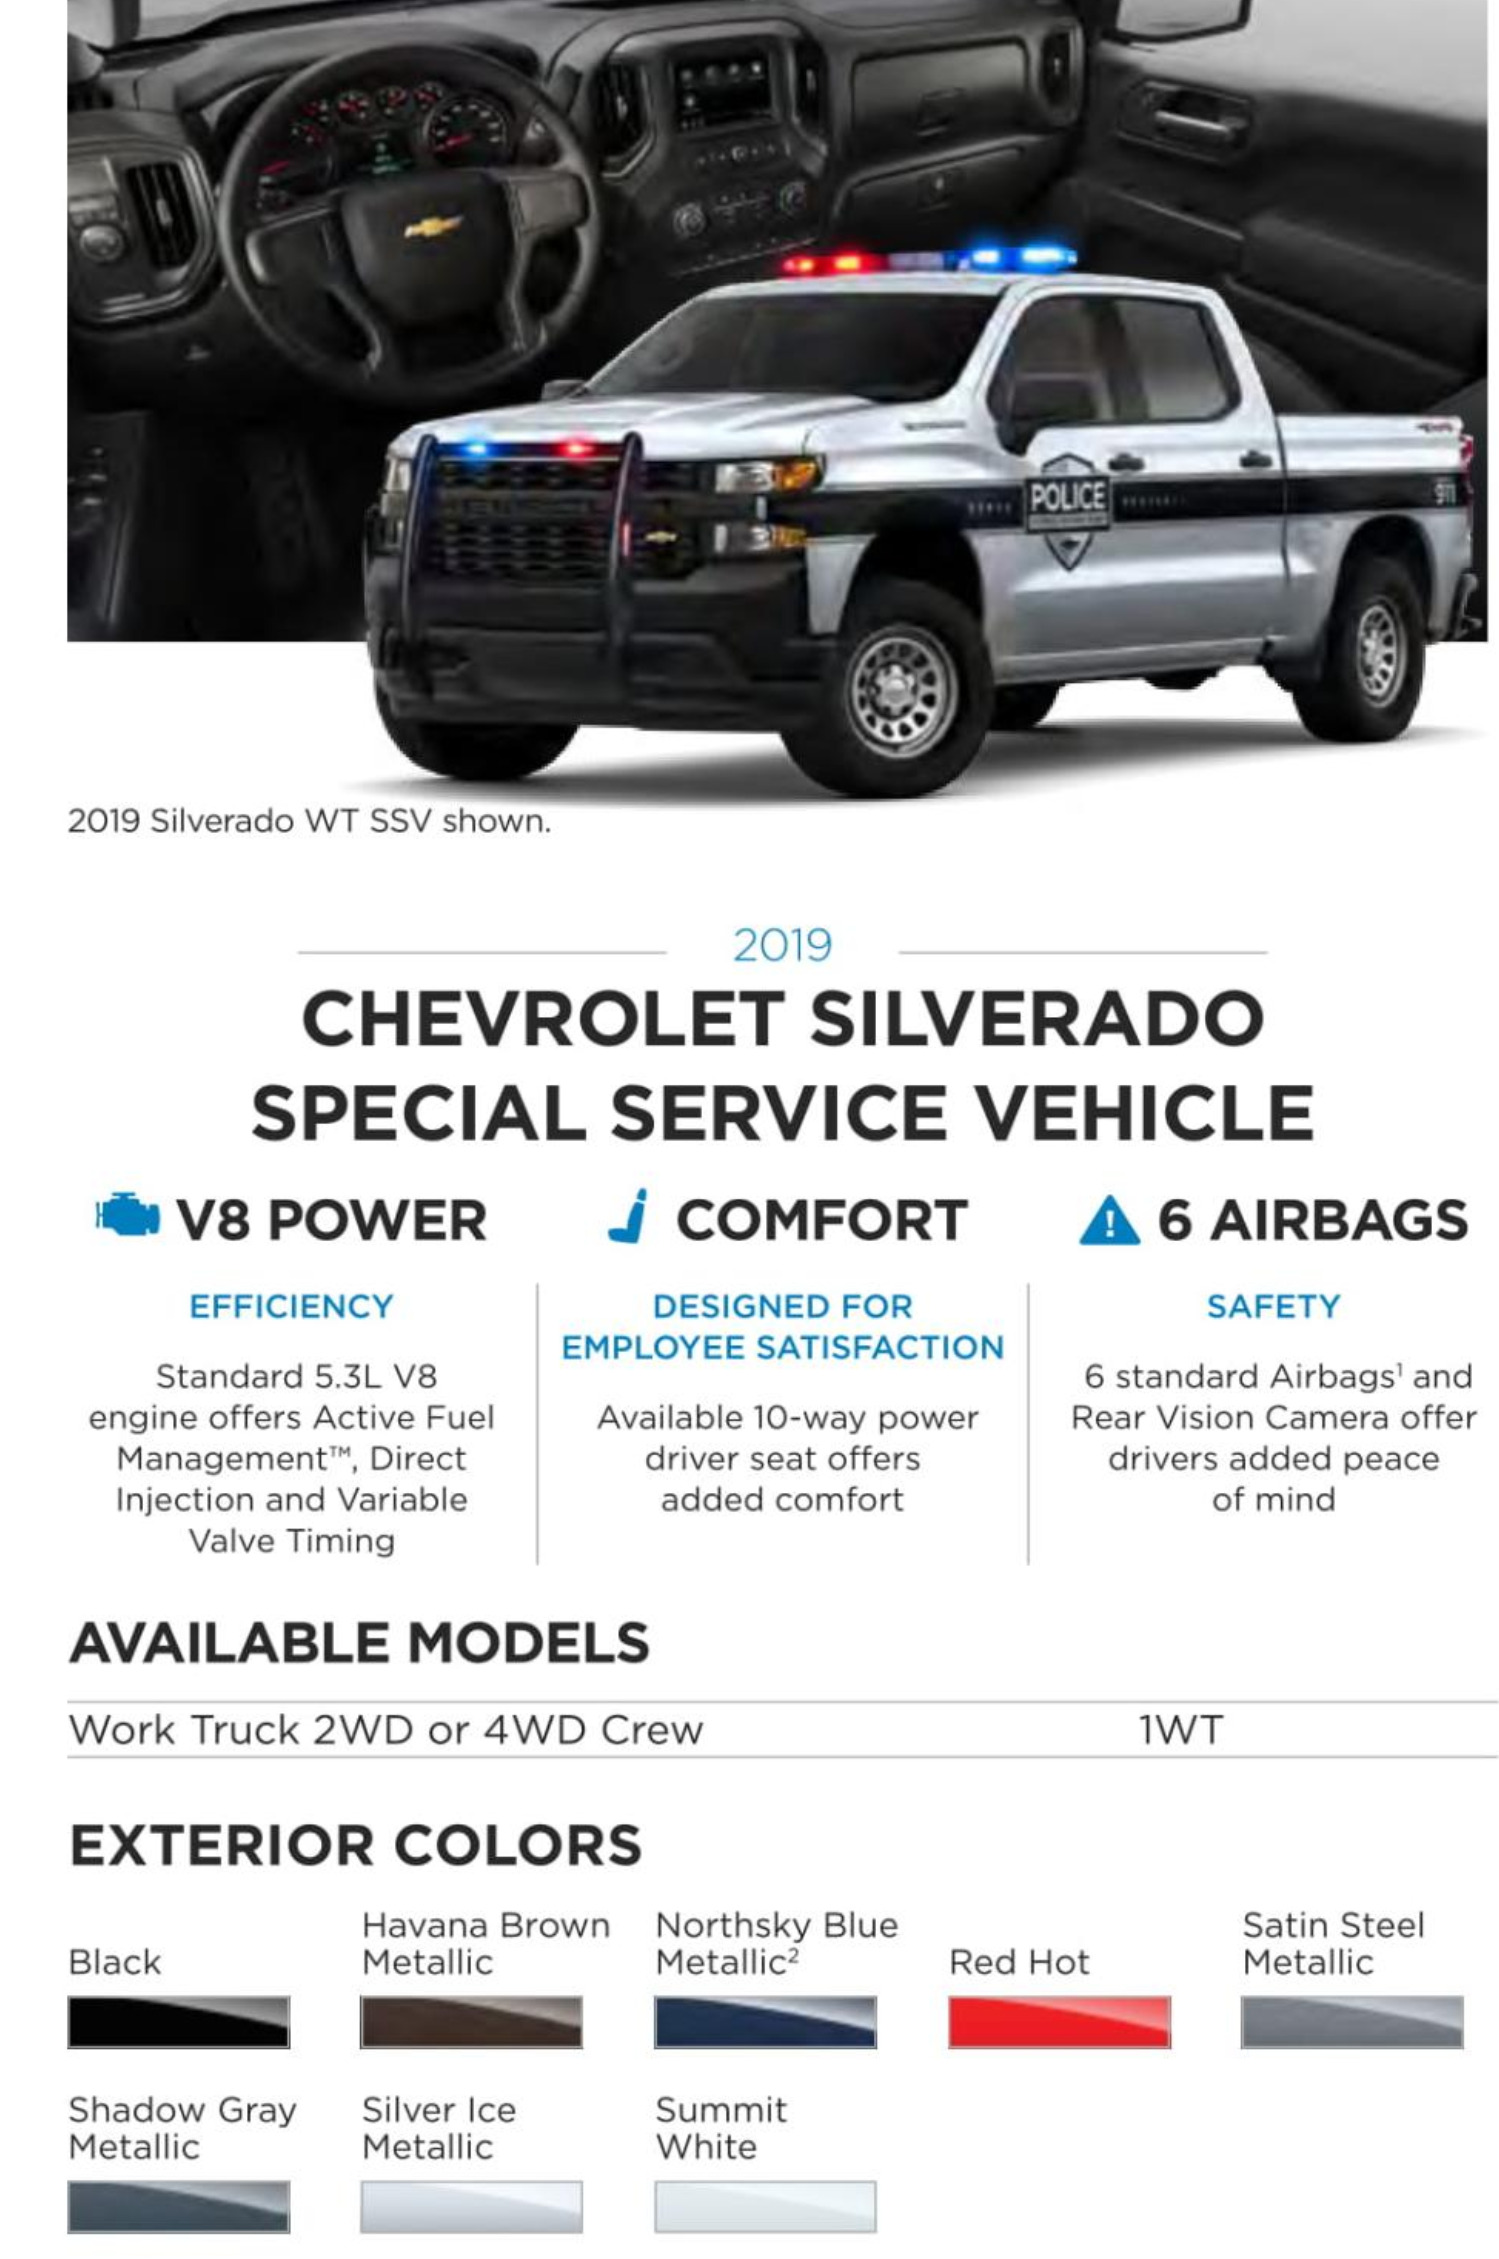 2019 General Motors Vehicle Models and Paint Chart